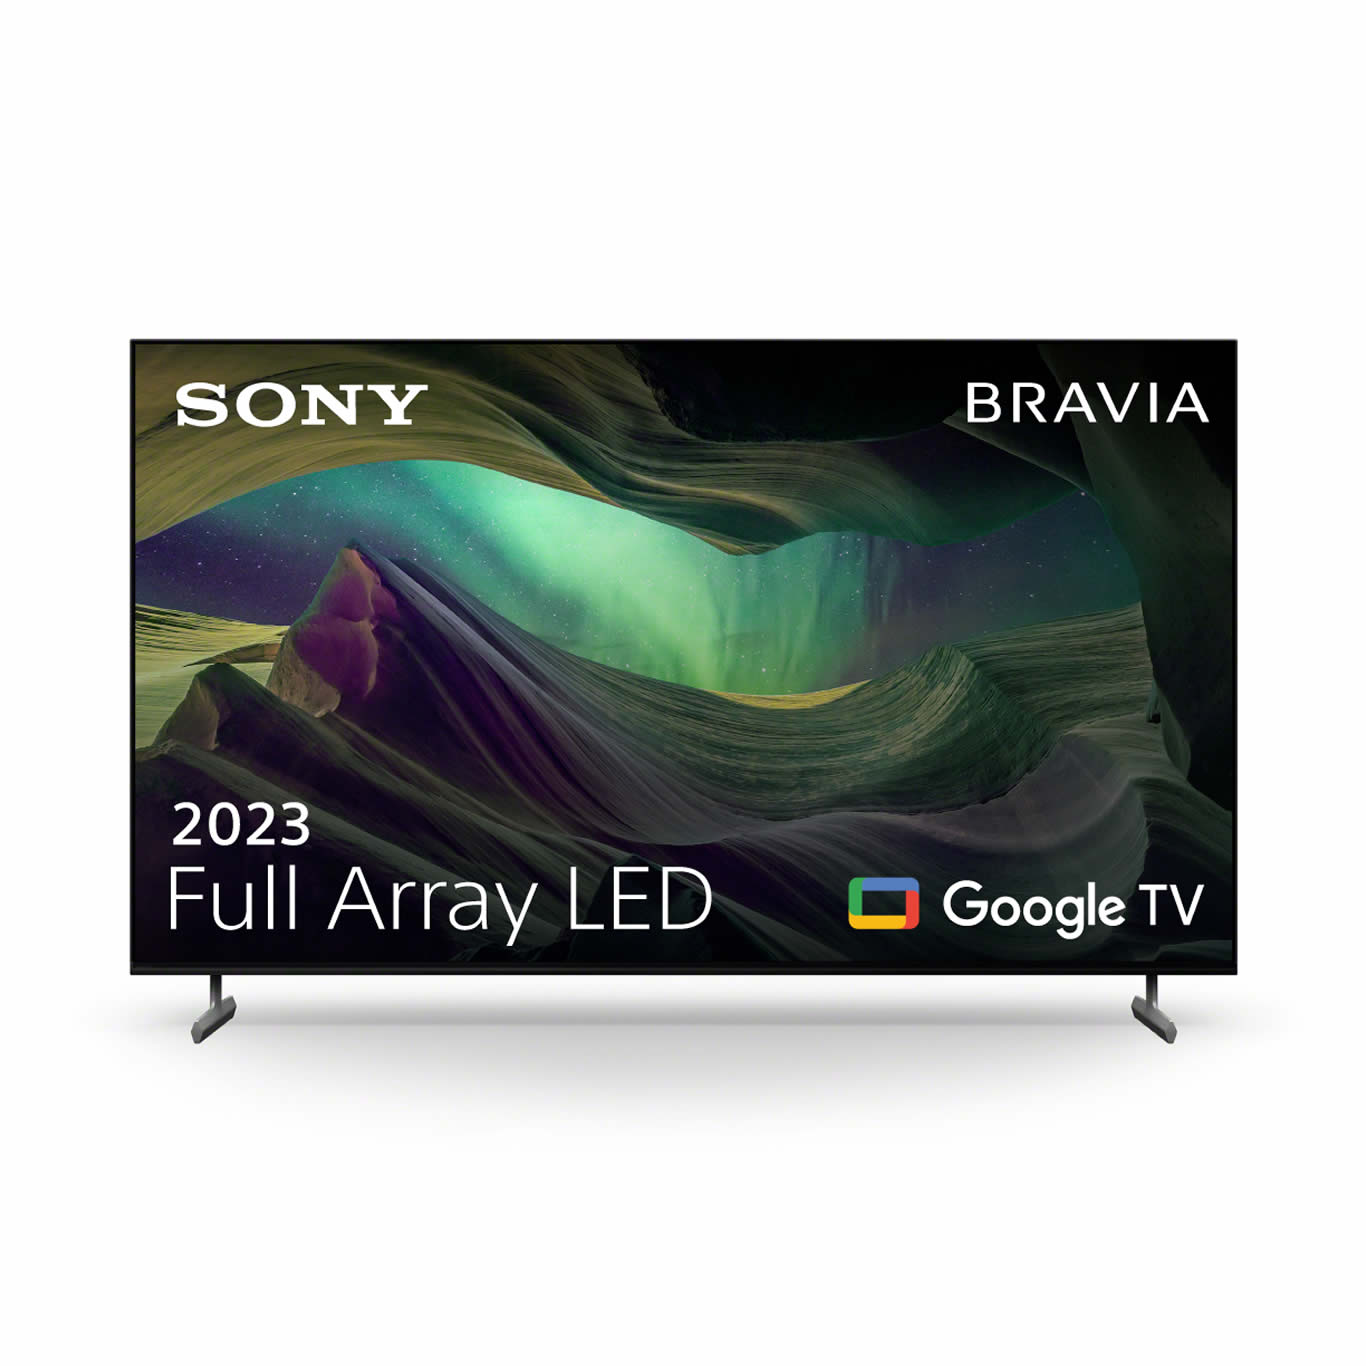 Sony 65inch 4K HDR Full Array LED SMART TV Google Wi-Fi